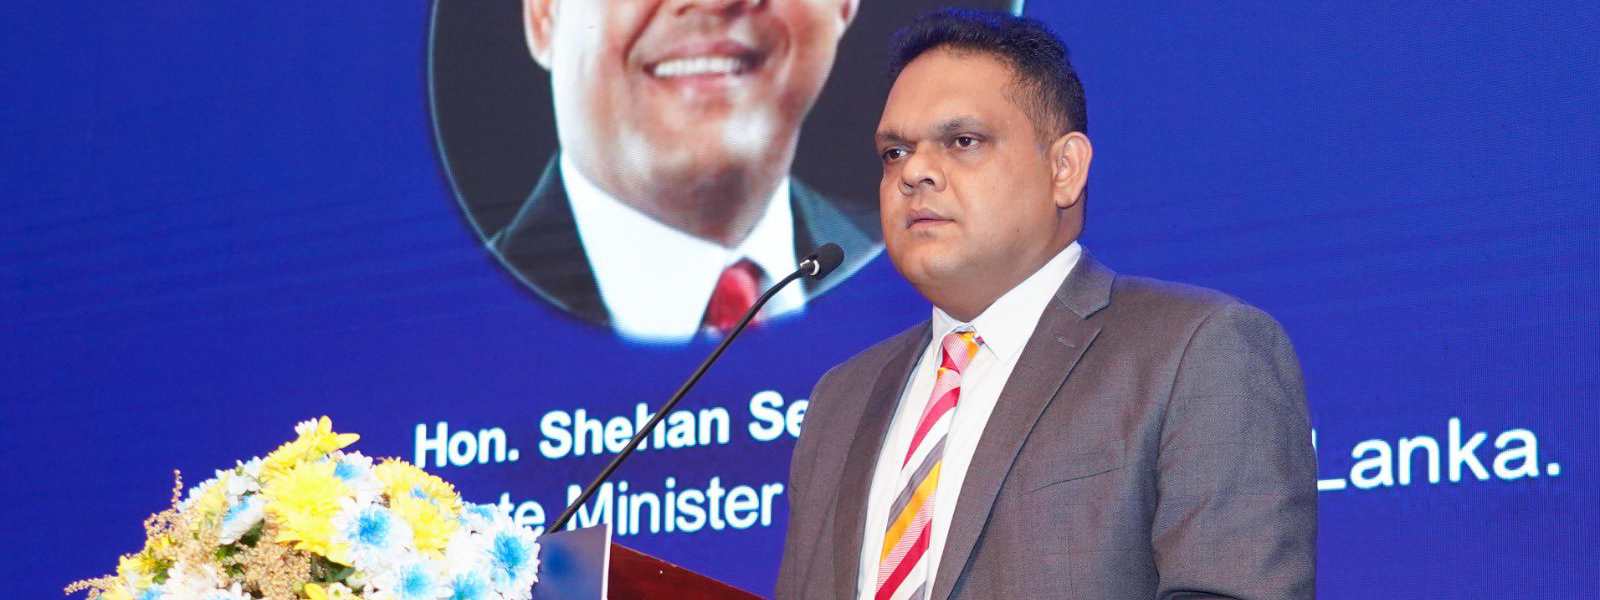 Sri Lanka on path of economic recovery - State Min